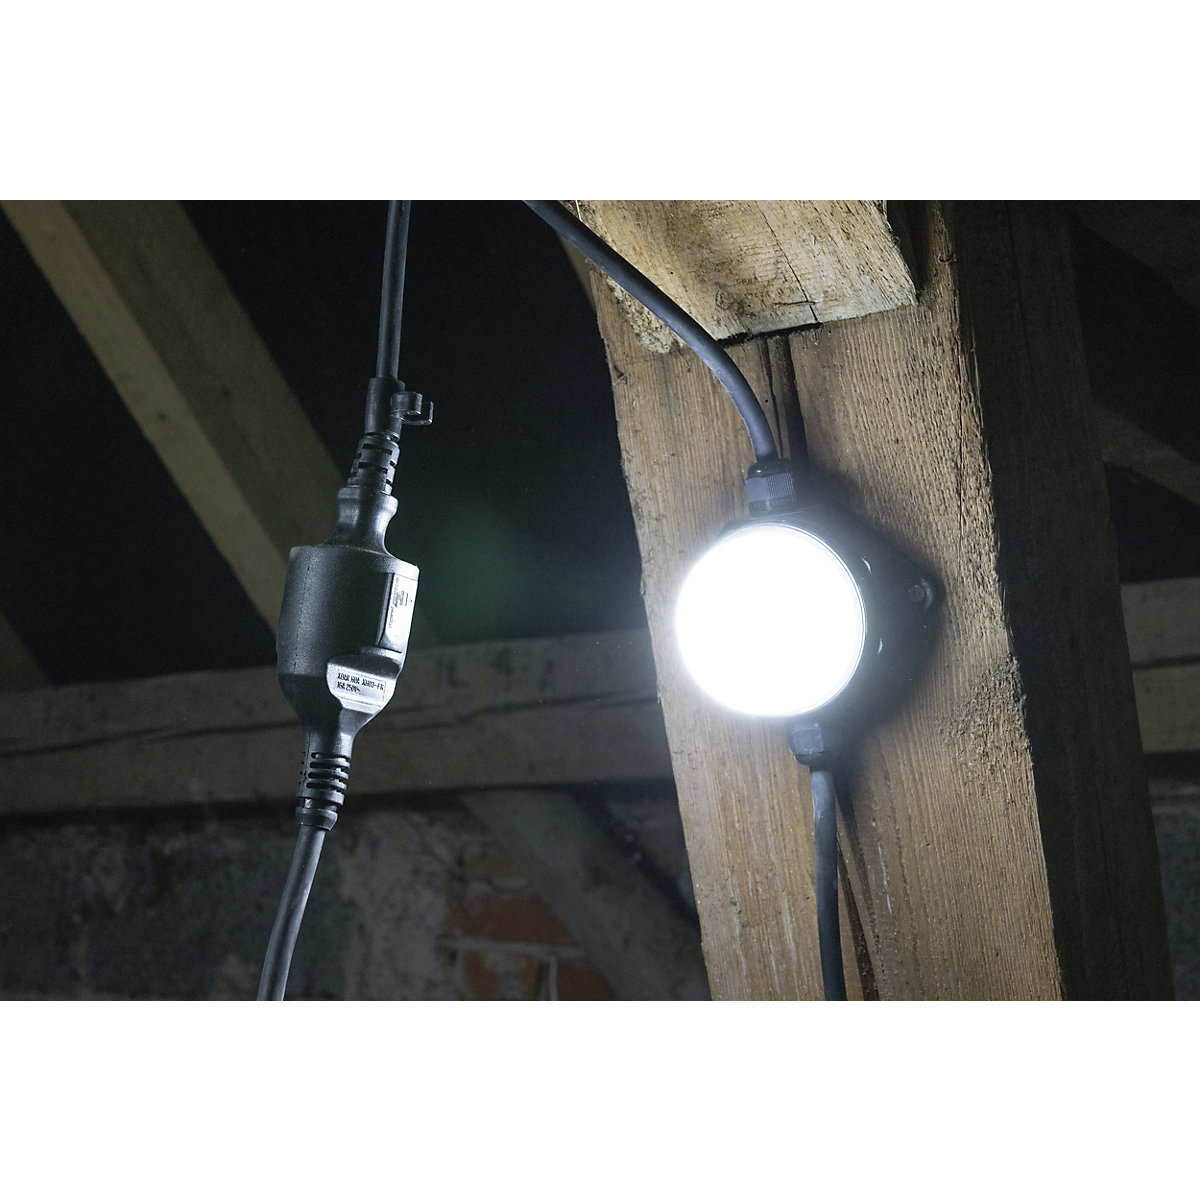 Light-Cord LC6000AC LED light chain – Ansmann (Product illustration 12)-11